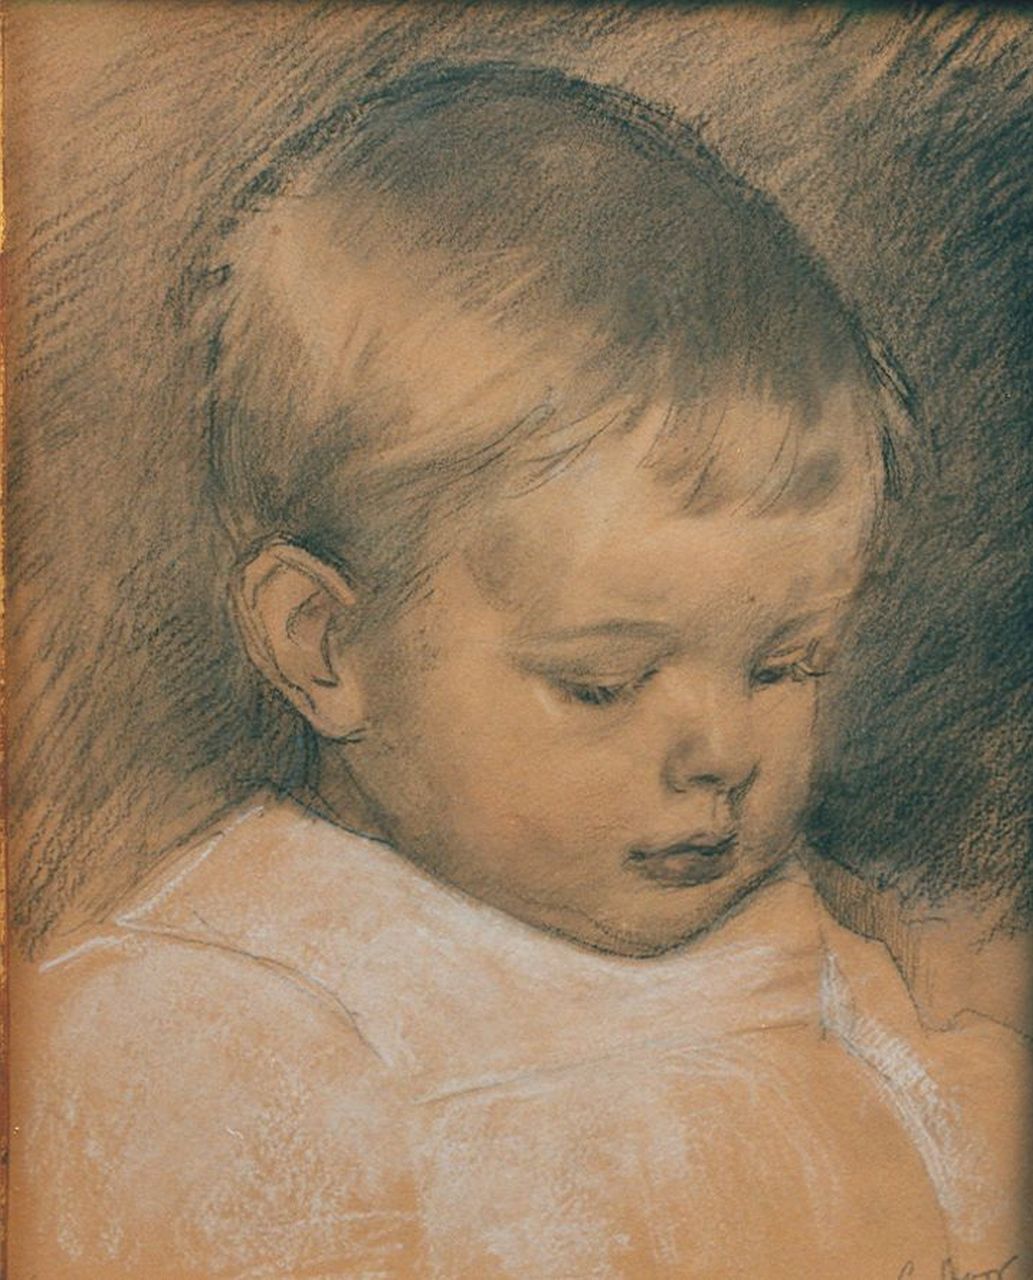 Spoor C.R.H.  | 'Cornelis' Rudolf Hendrik  Spoor, A portrait of a baby, drawing on paper 27.5 x 21.2 cm, signed l.r.